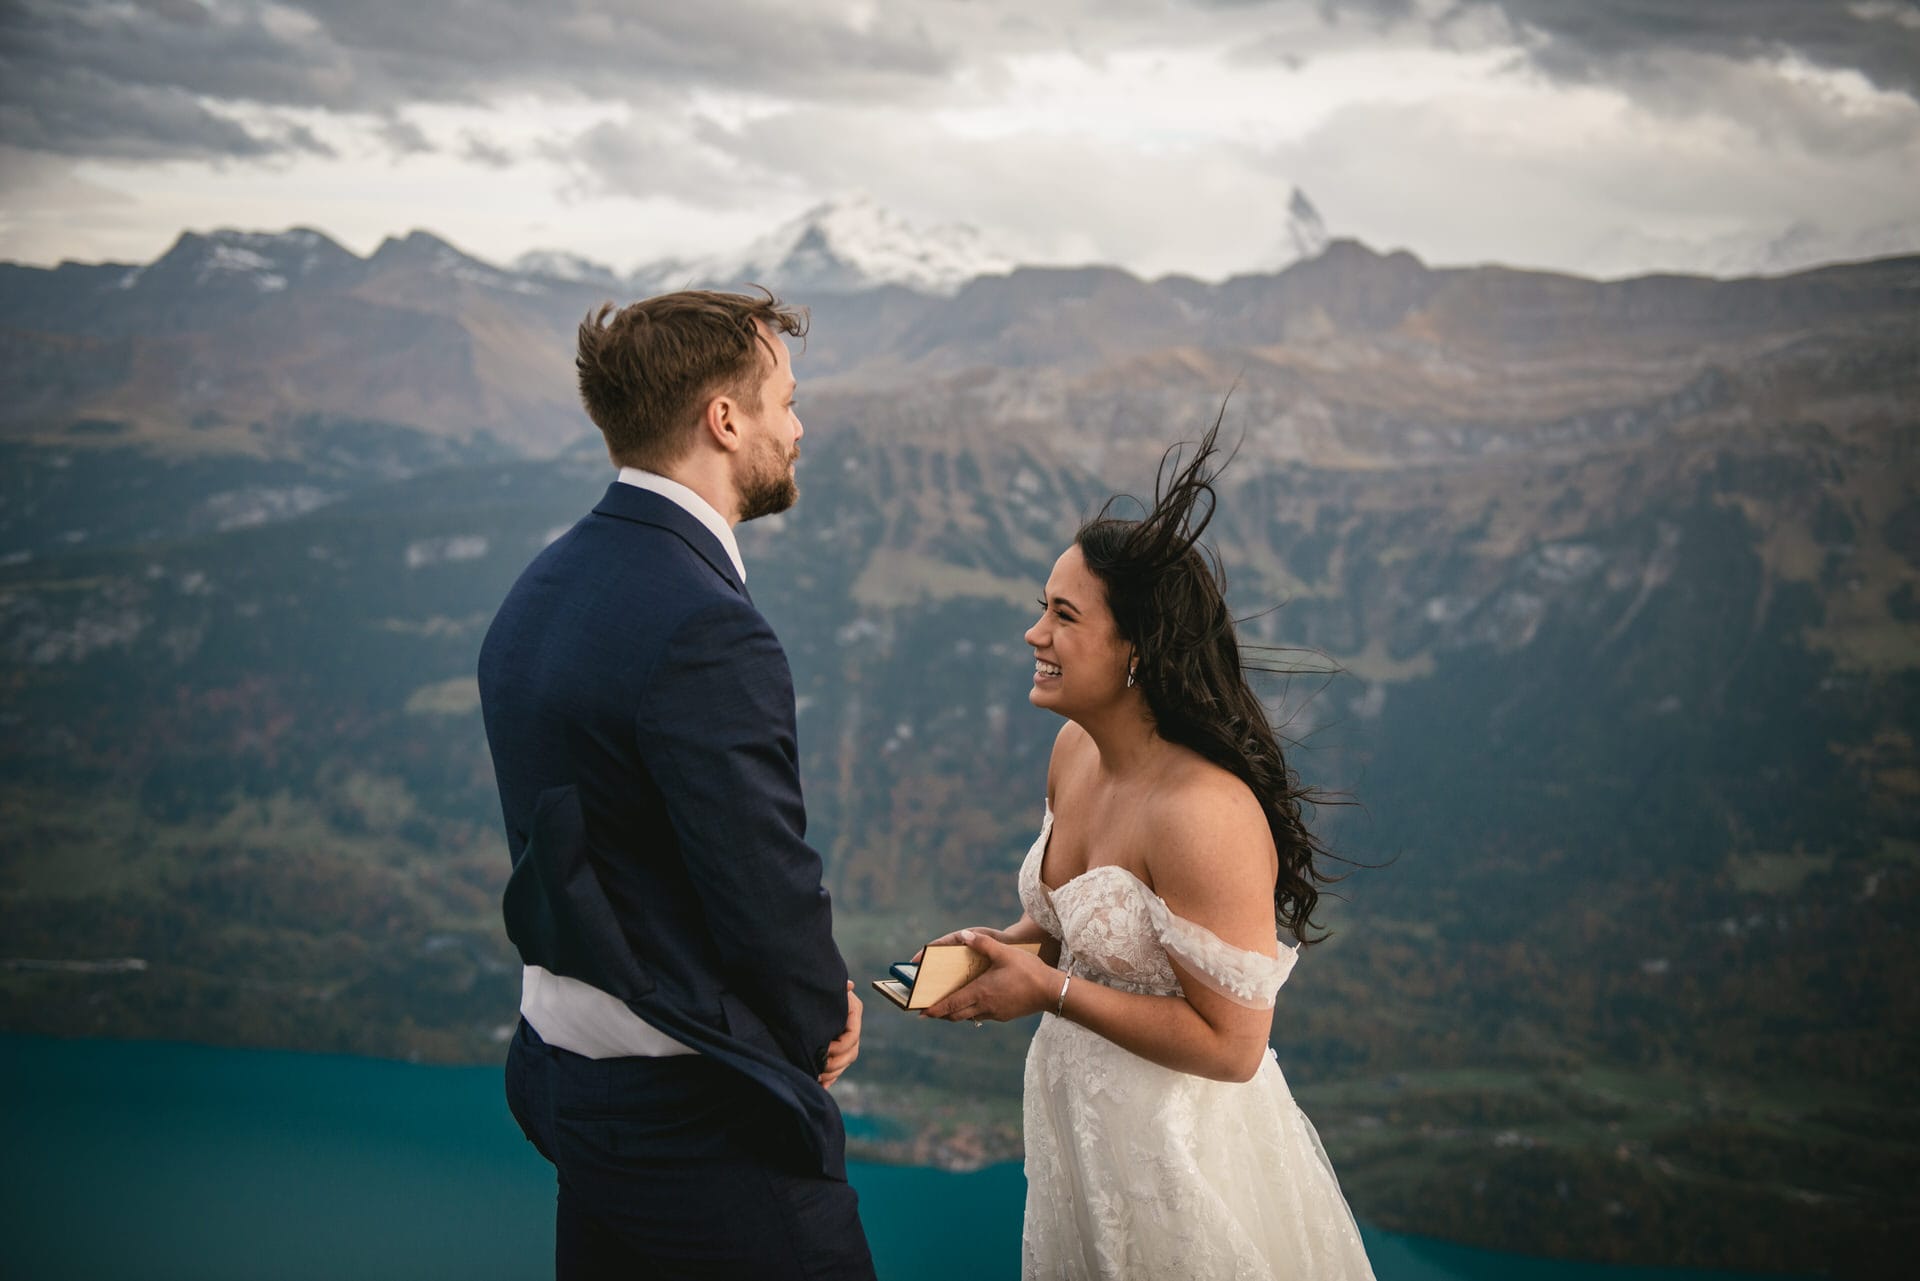 Couple on their elopement day in the Interlaken region of Switzerland - ceremony overlooking the Brienz lake